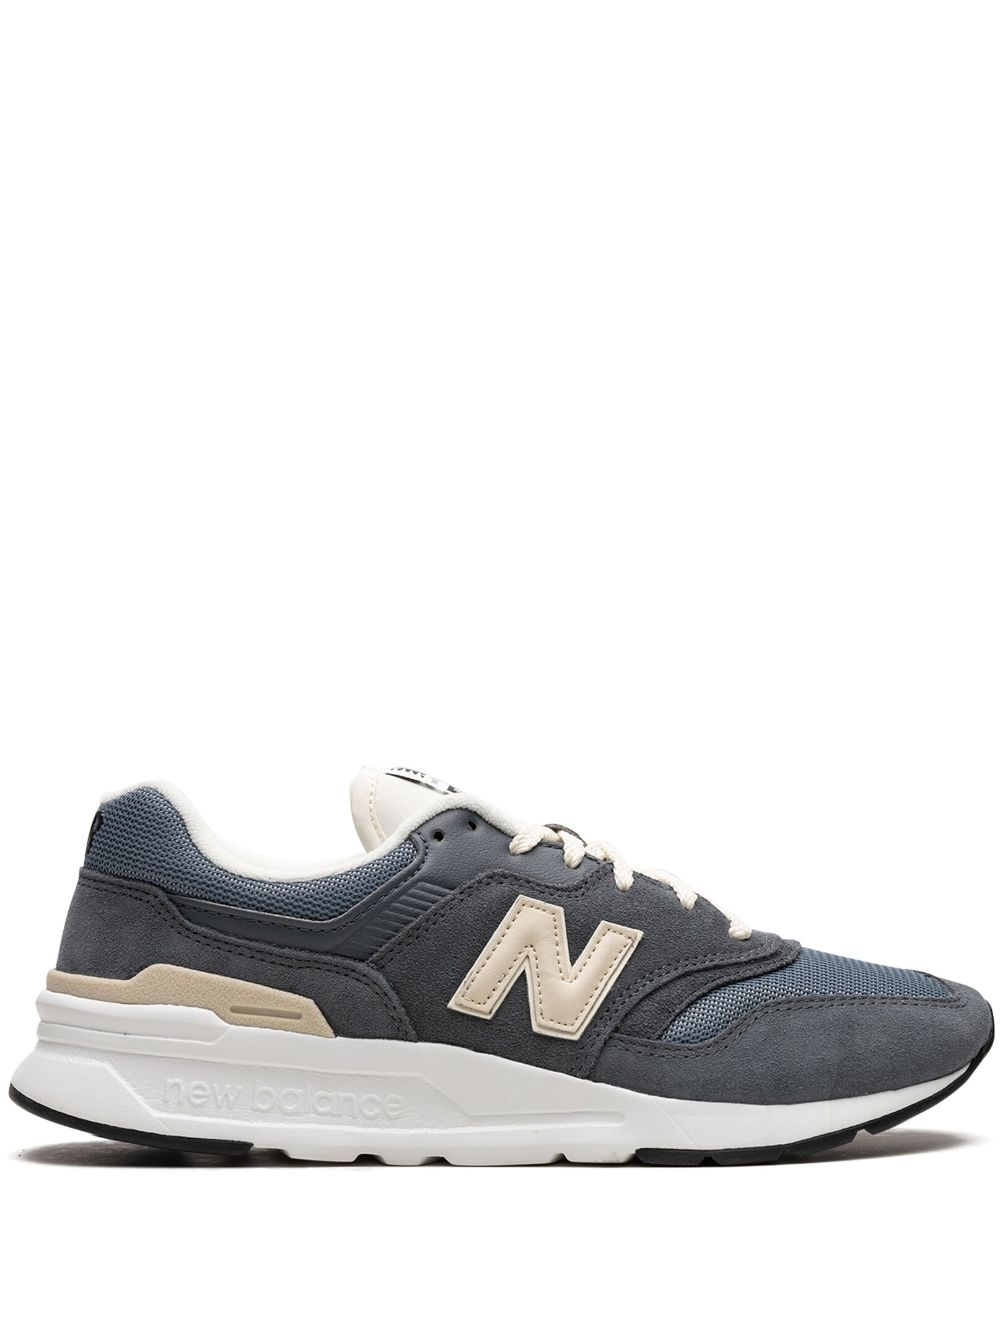 New Balance 997 "Graphite" sneakers - Blue von New Balance